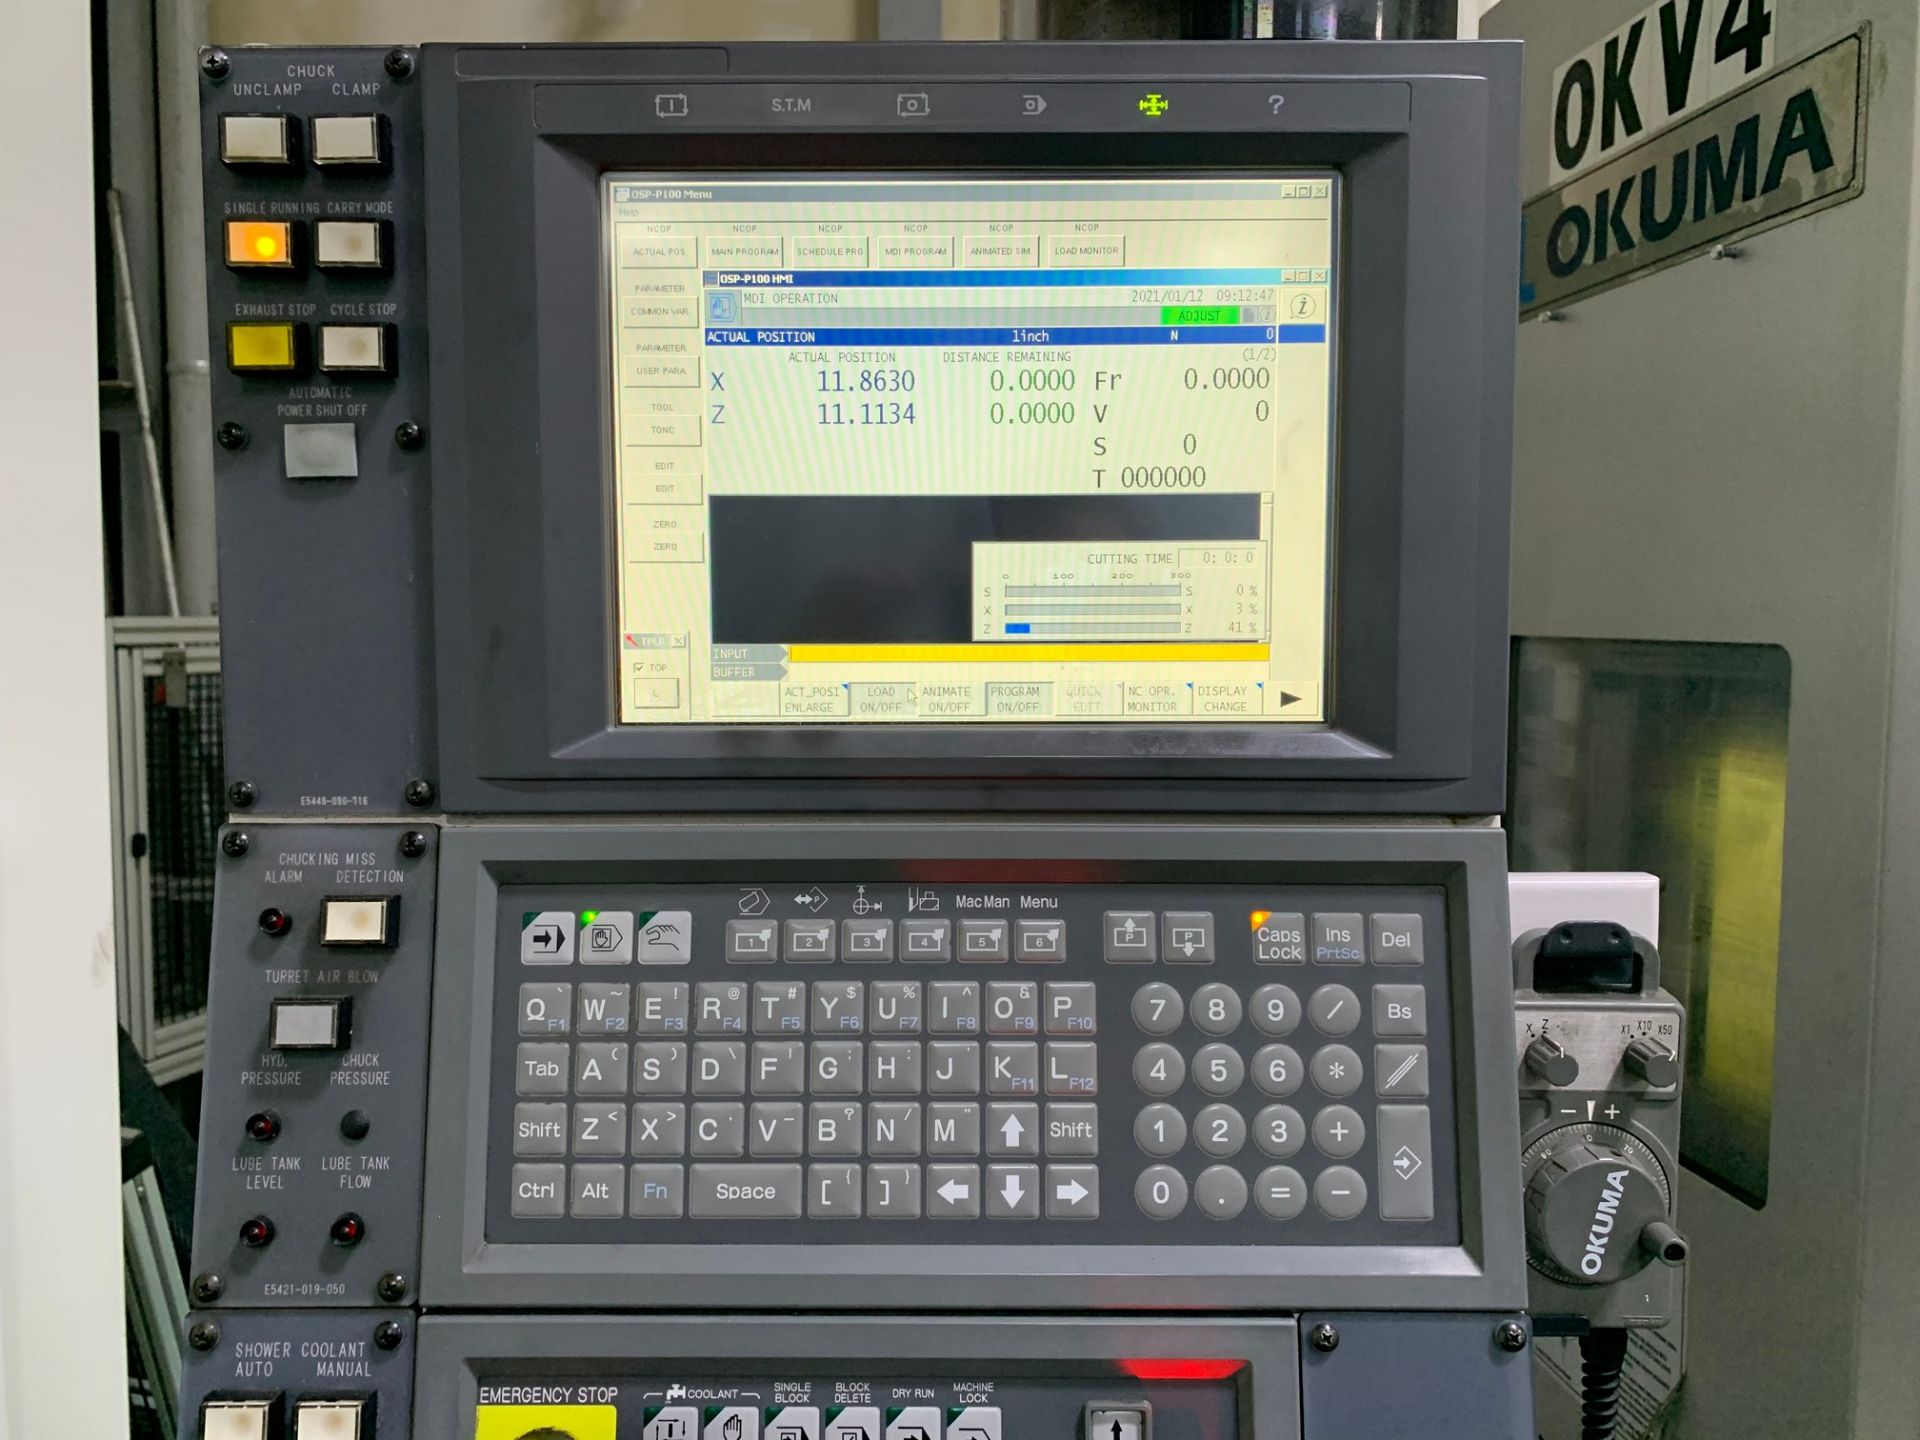 2006 OKUMA LVT-300 CNC VERTICAL TURNING CENTER, OKUMA OSP-P100L CNC CONTROLLER, 12-STATION VDI - Image 4 of 14